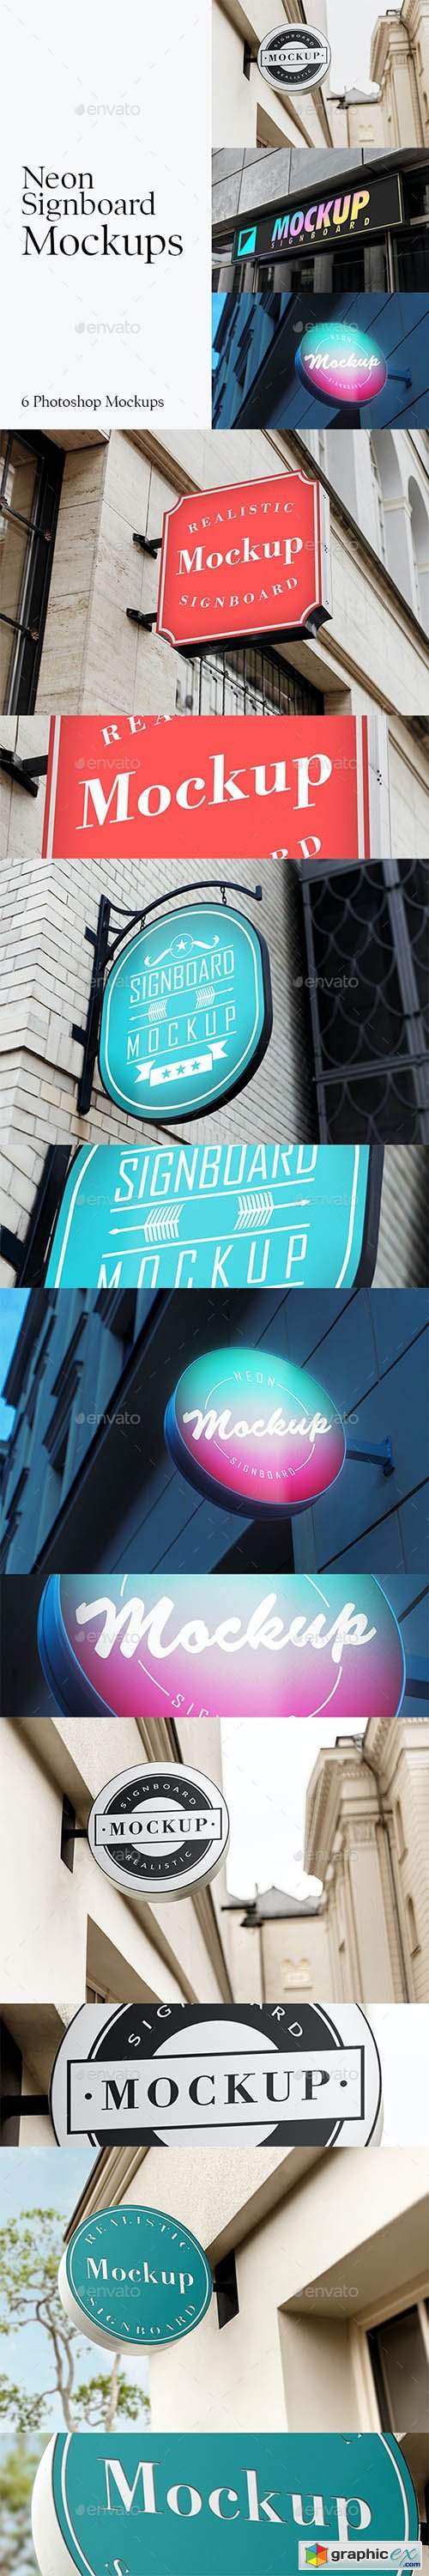 6 Neon Signboard Mockups 